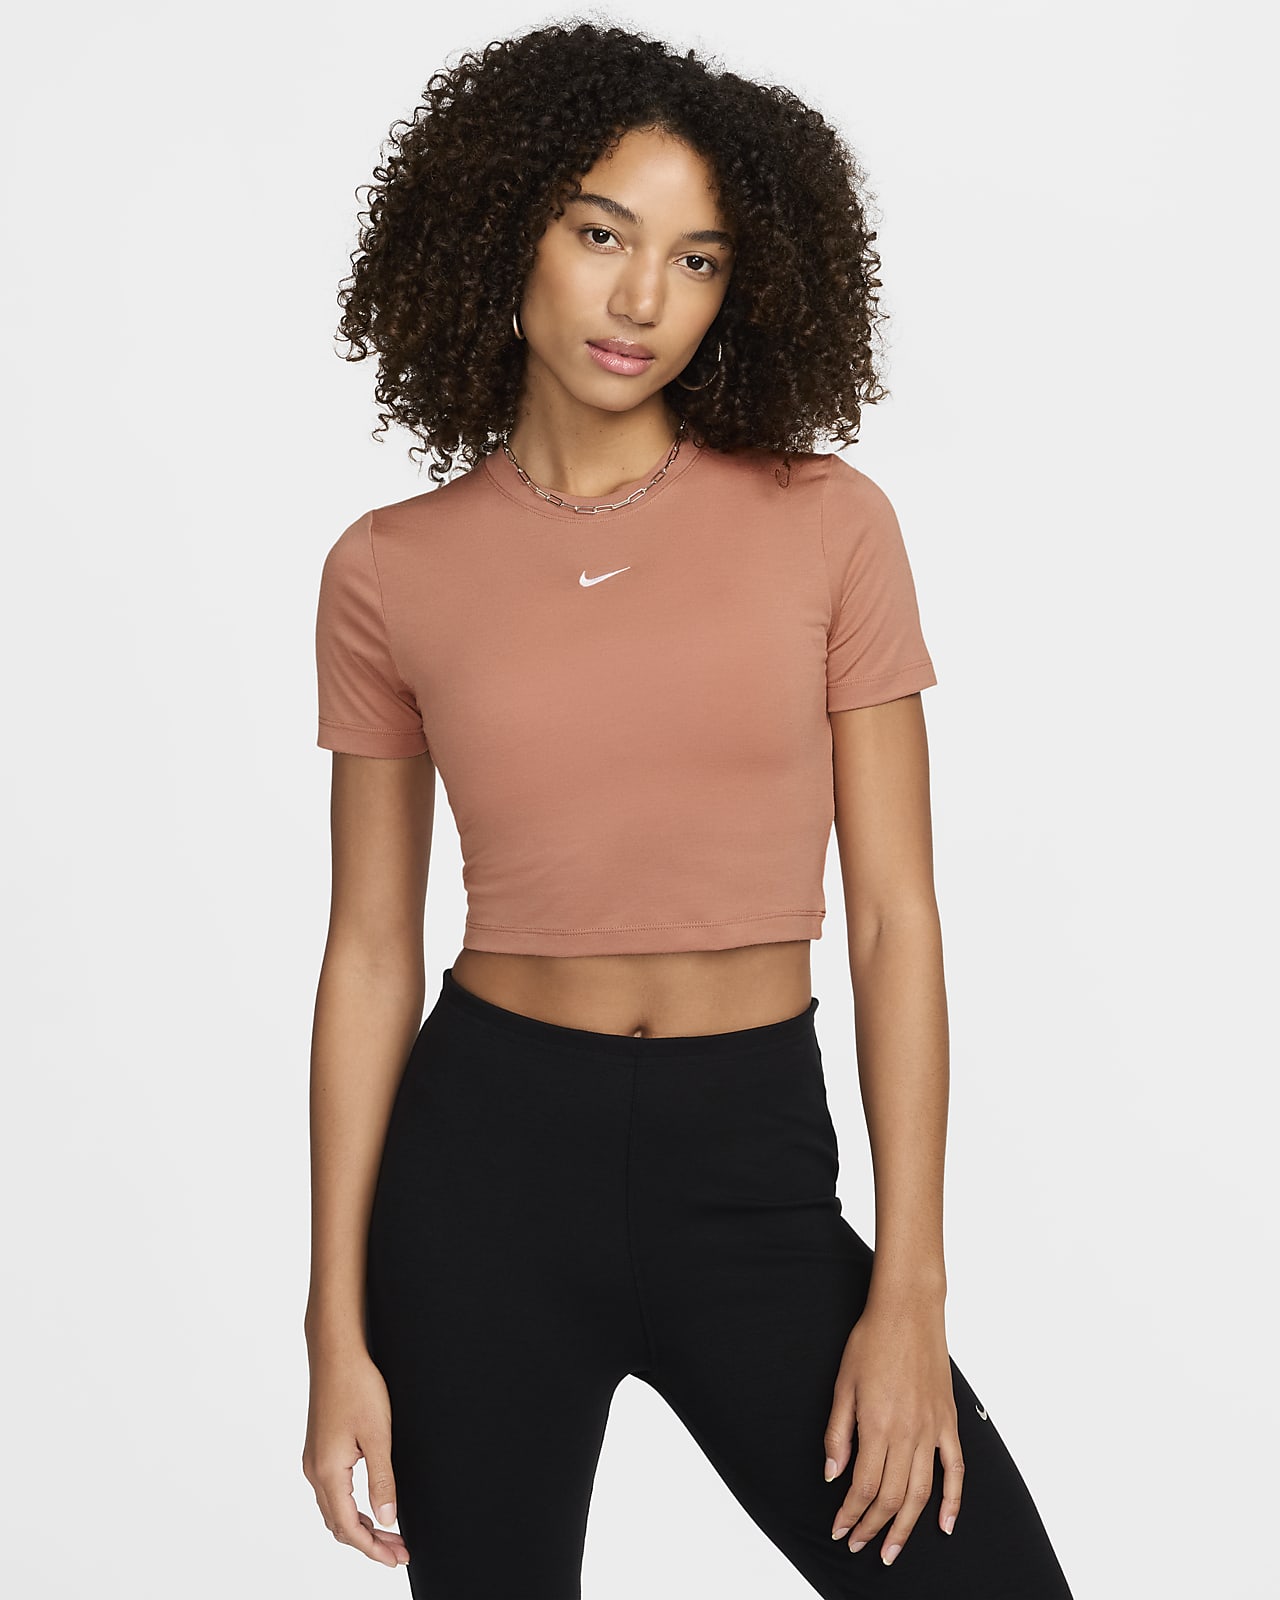 Playera slim cropped para mujer Nike Sportswear Essential